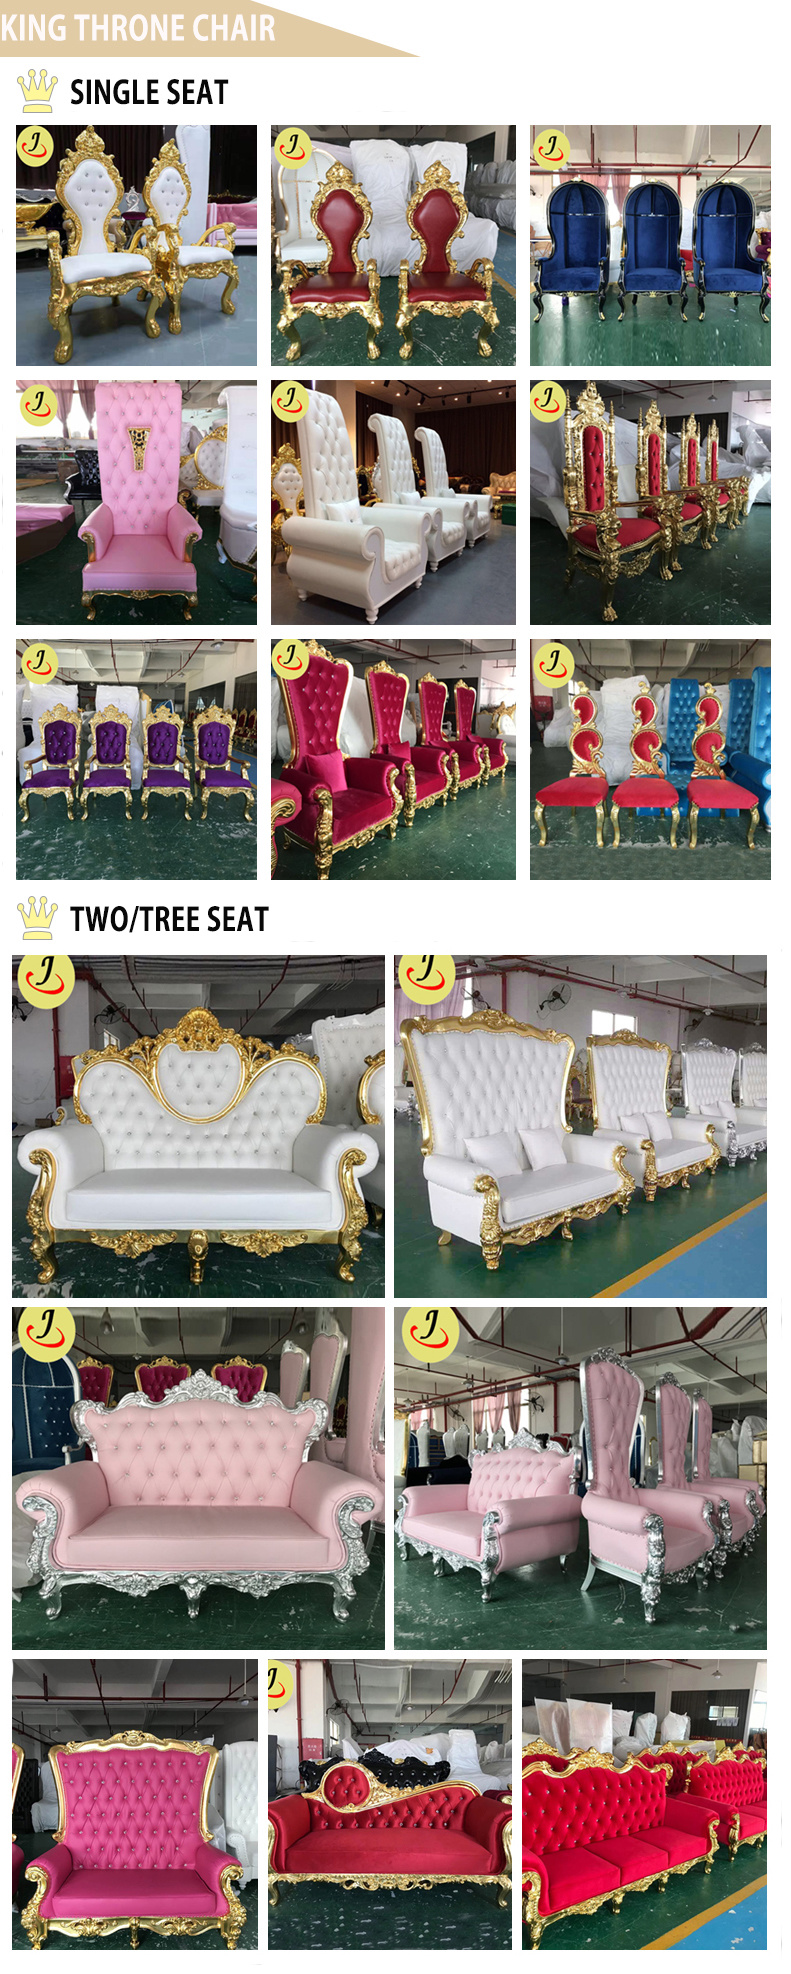 Gold Throne Chair Royal Cheaper King Throne Chair Wedding for Children Party Kids Chair